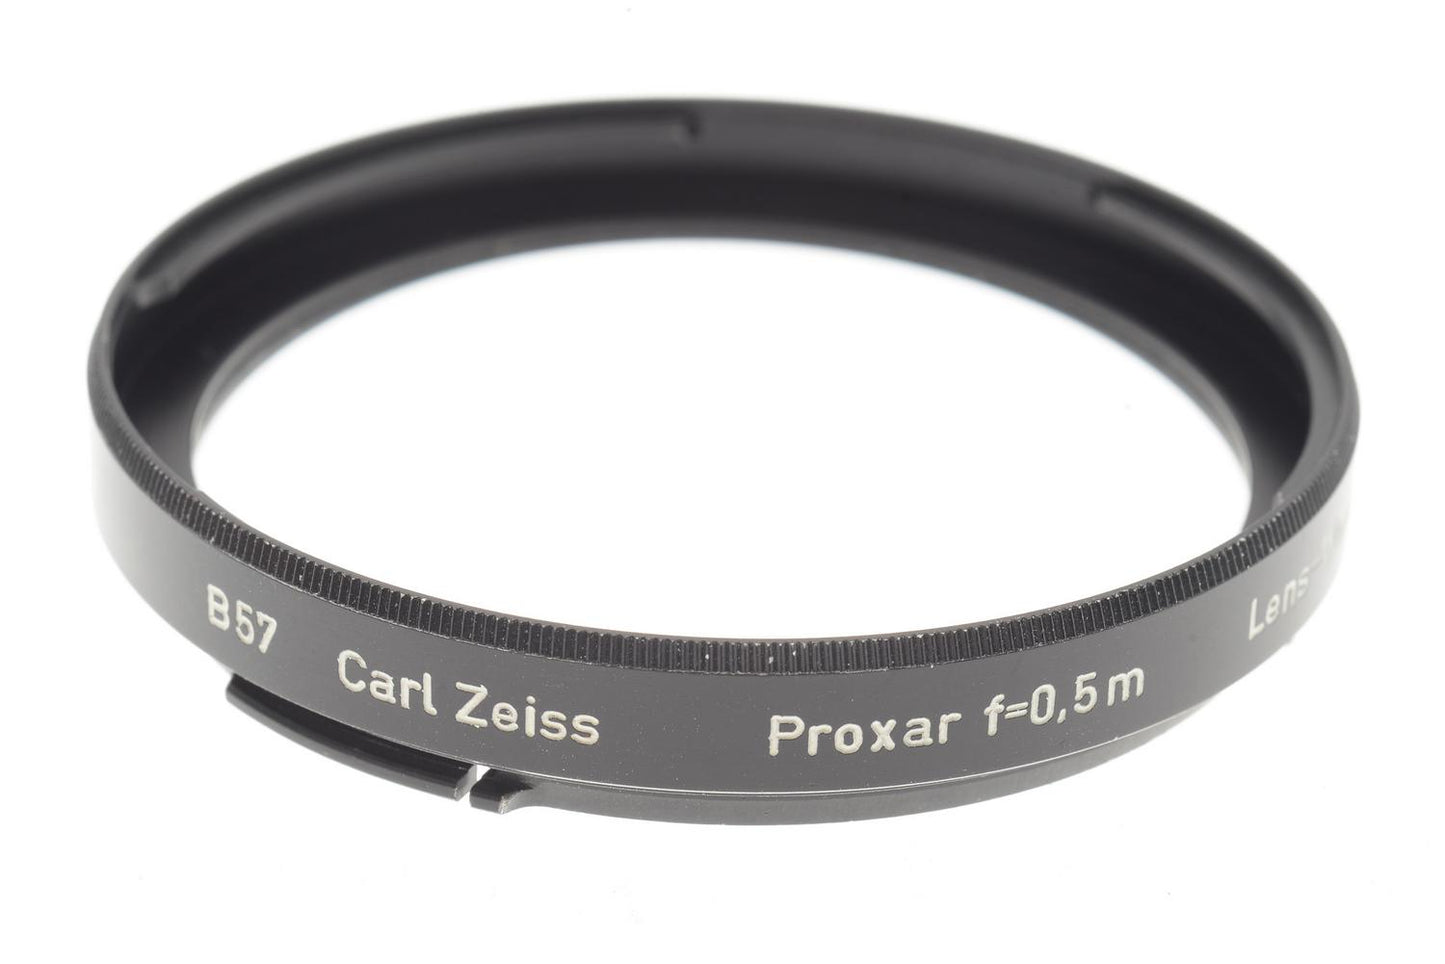 Hasselblad B57 Close-Up Filter Proxar f=0.5m (50296/TICLC) - Accessory